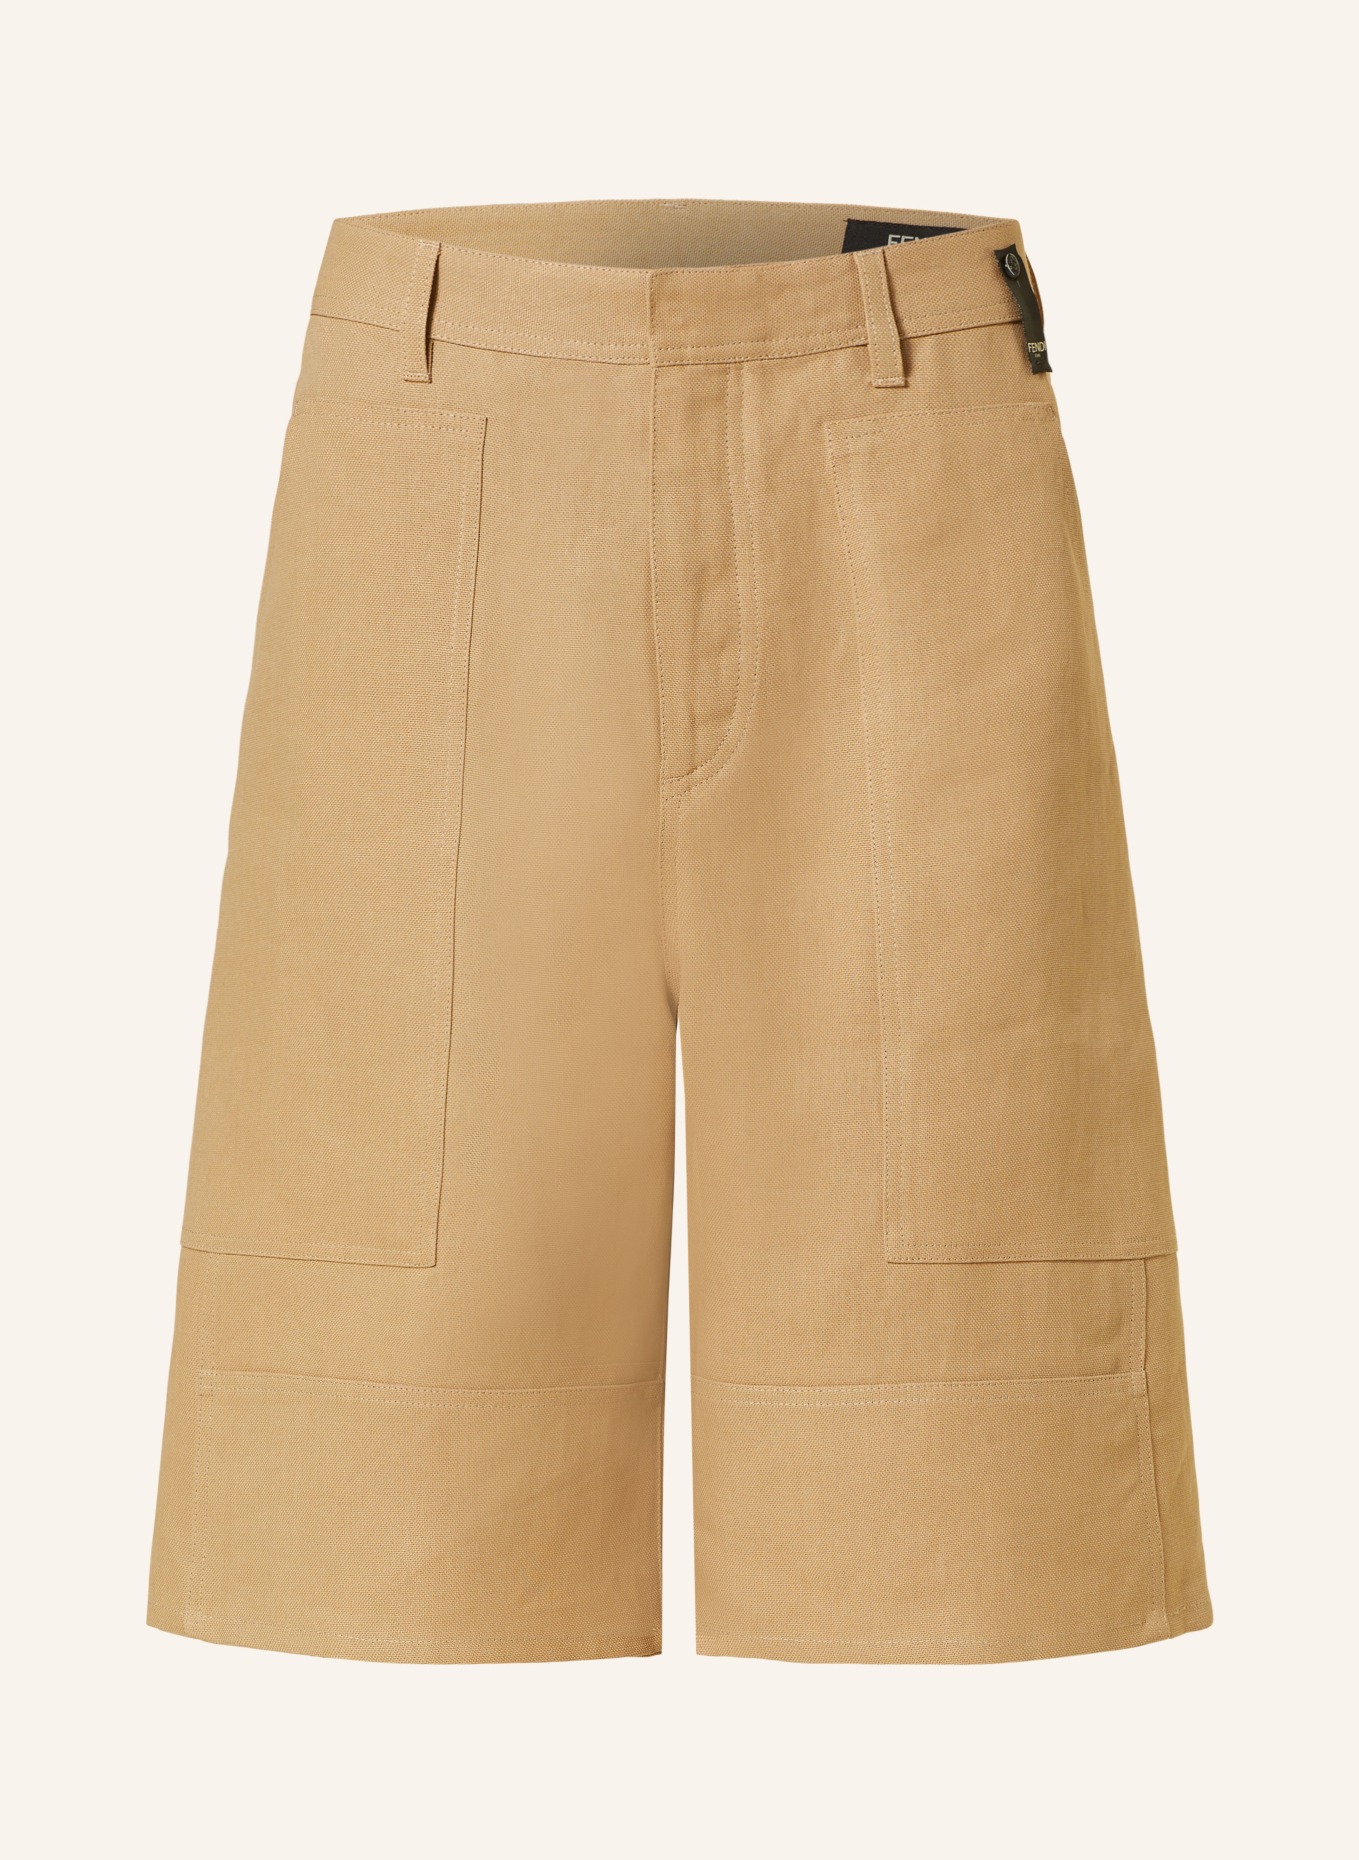 FENDI Shorts, Farbe: CAMEL (Bild 1)